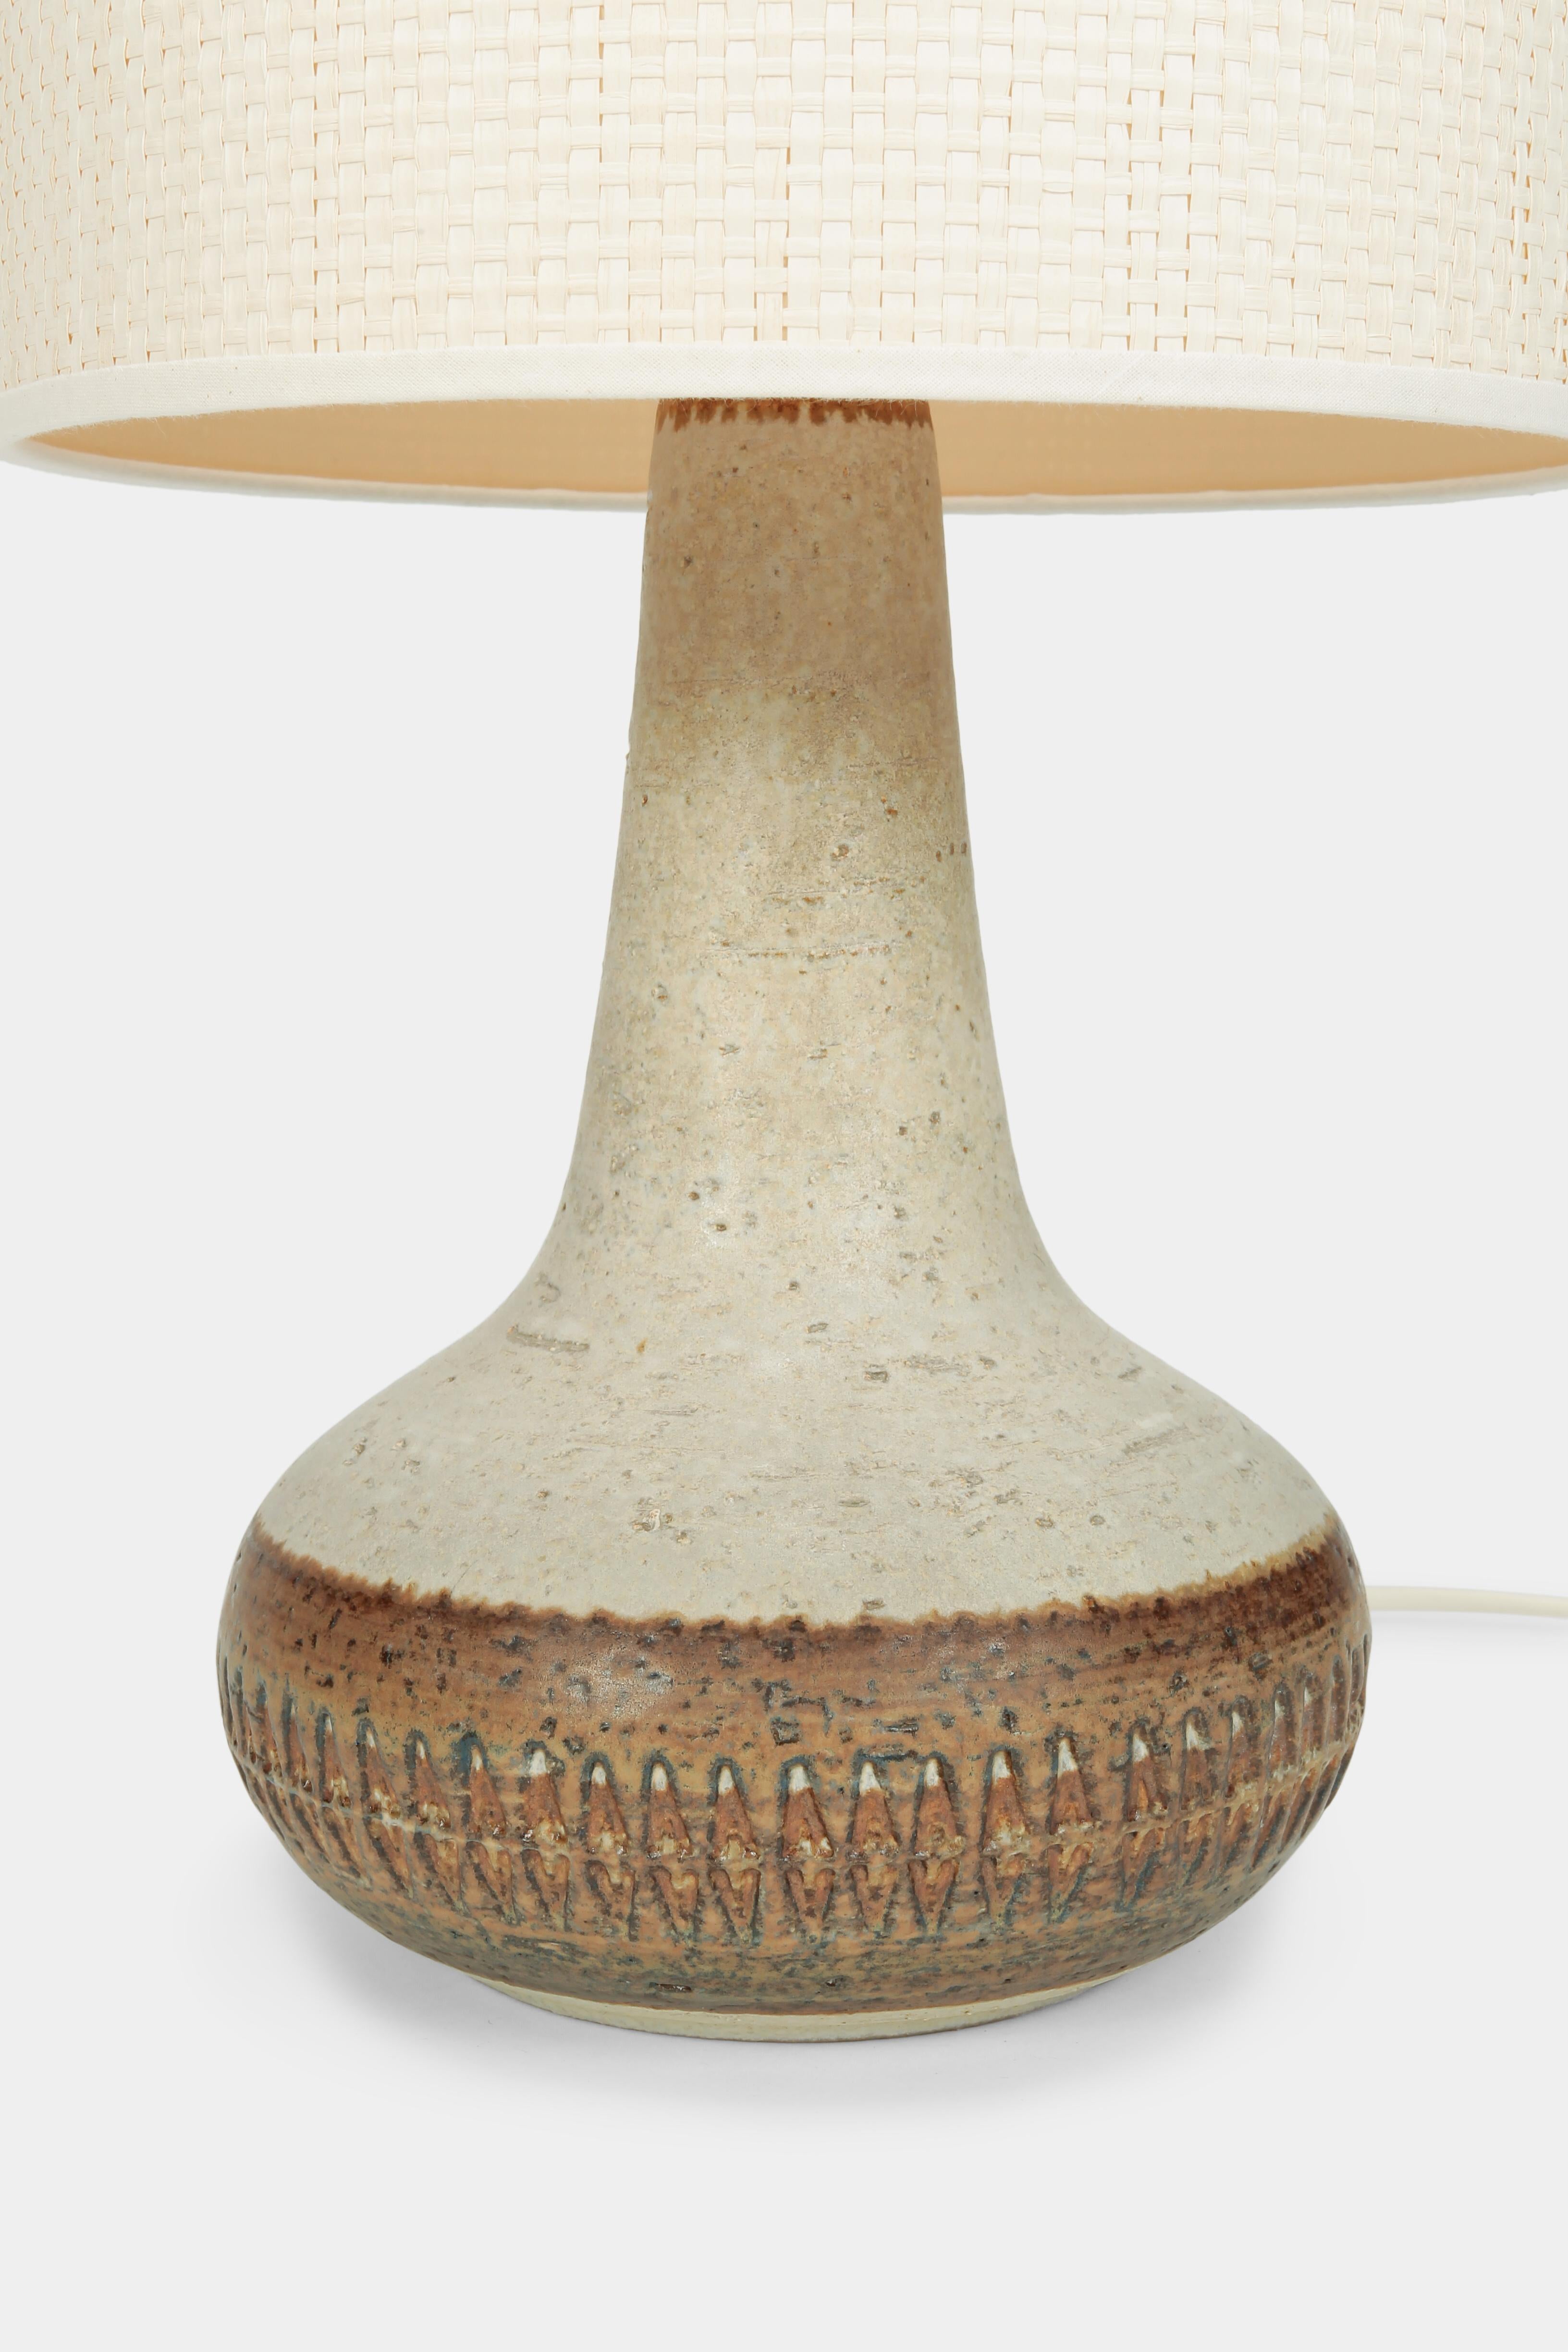 Beautiful handmade ceramic lamp from Søholm Stentøj in Bornholm Denmark. New lampshade and maker’s mark underneath.